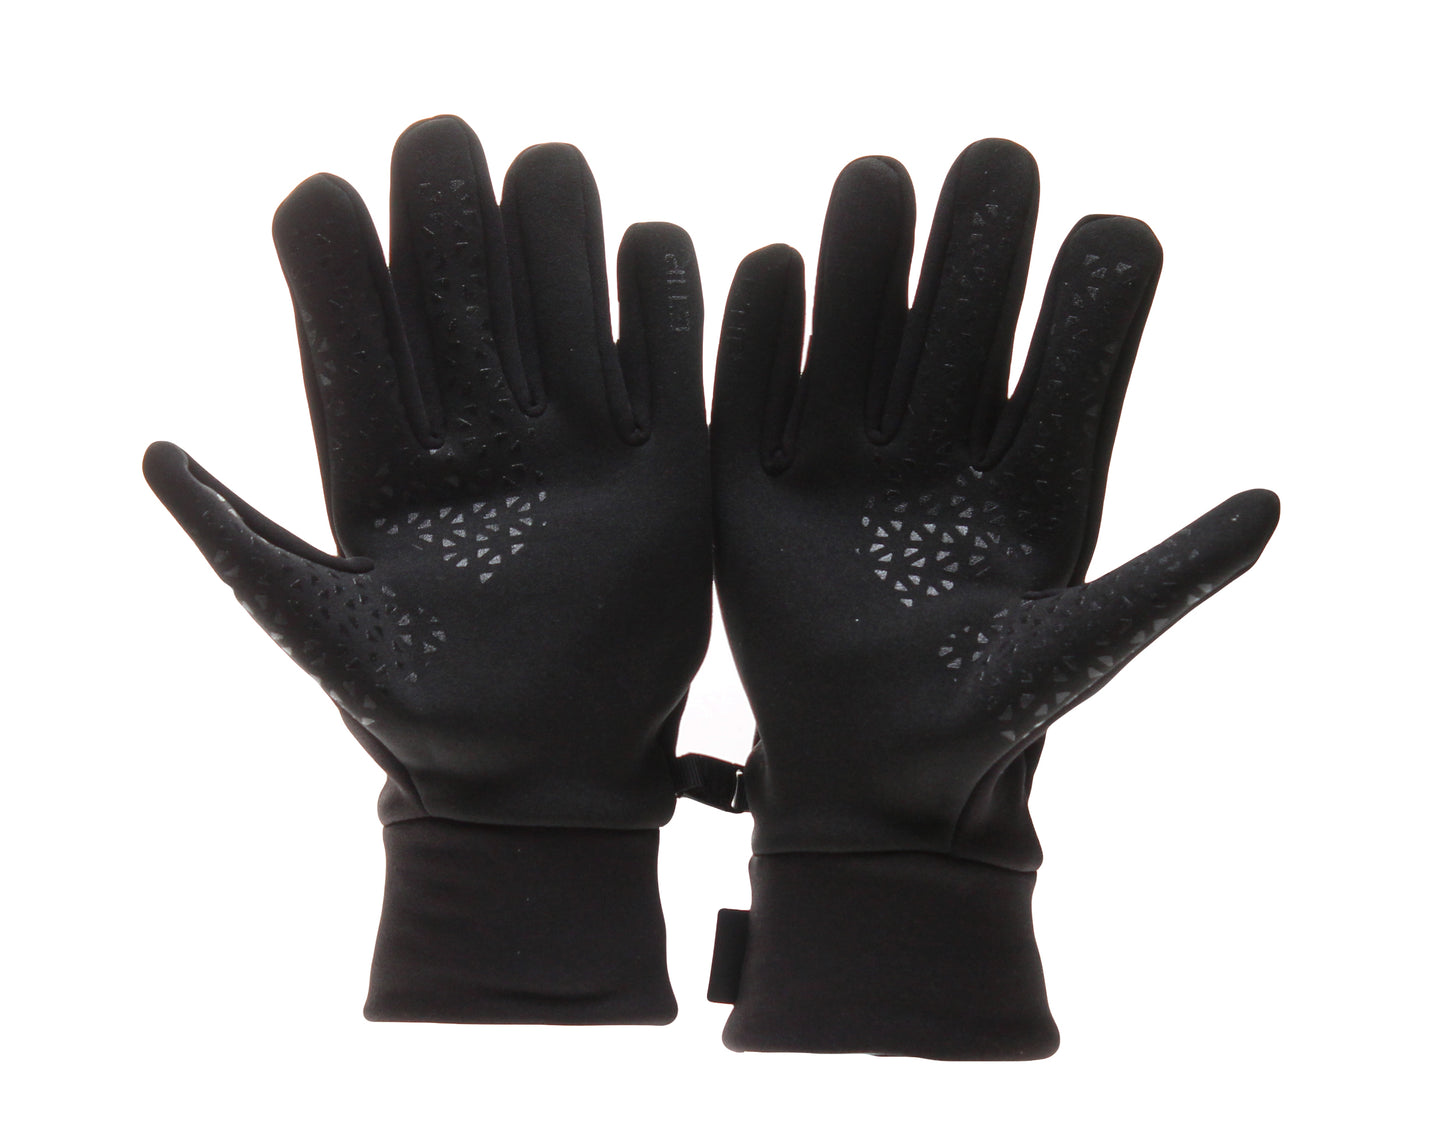 The North Face Etip Men's Gloves